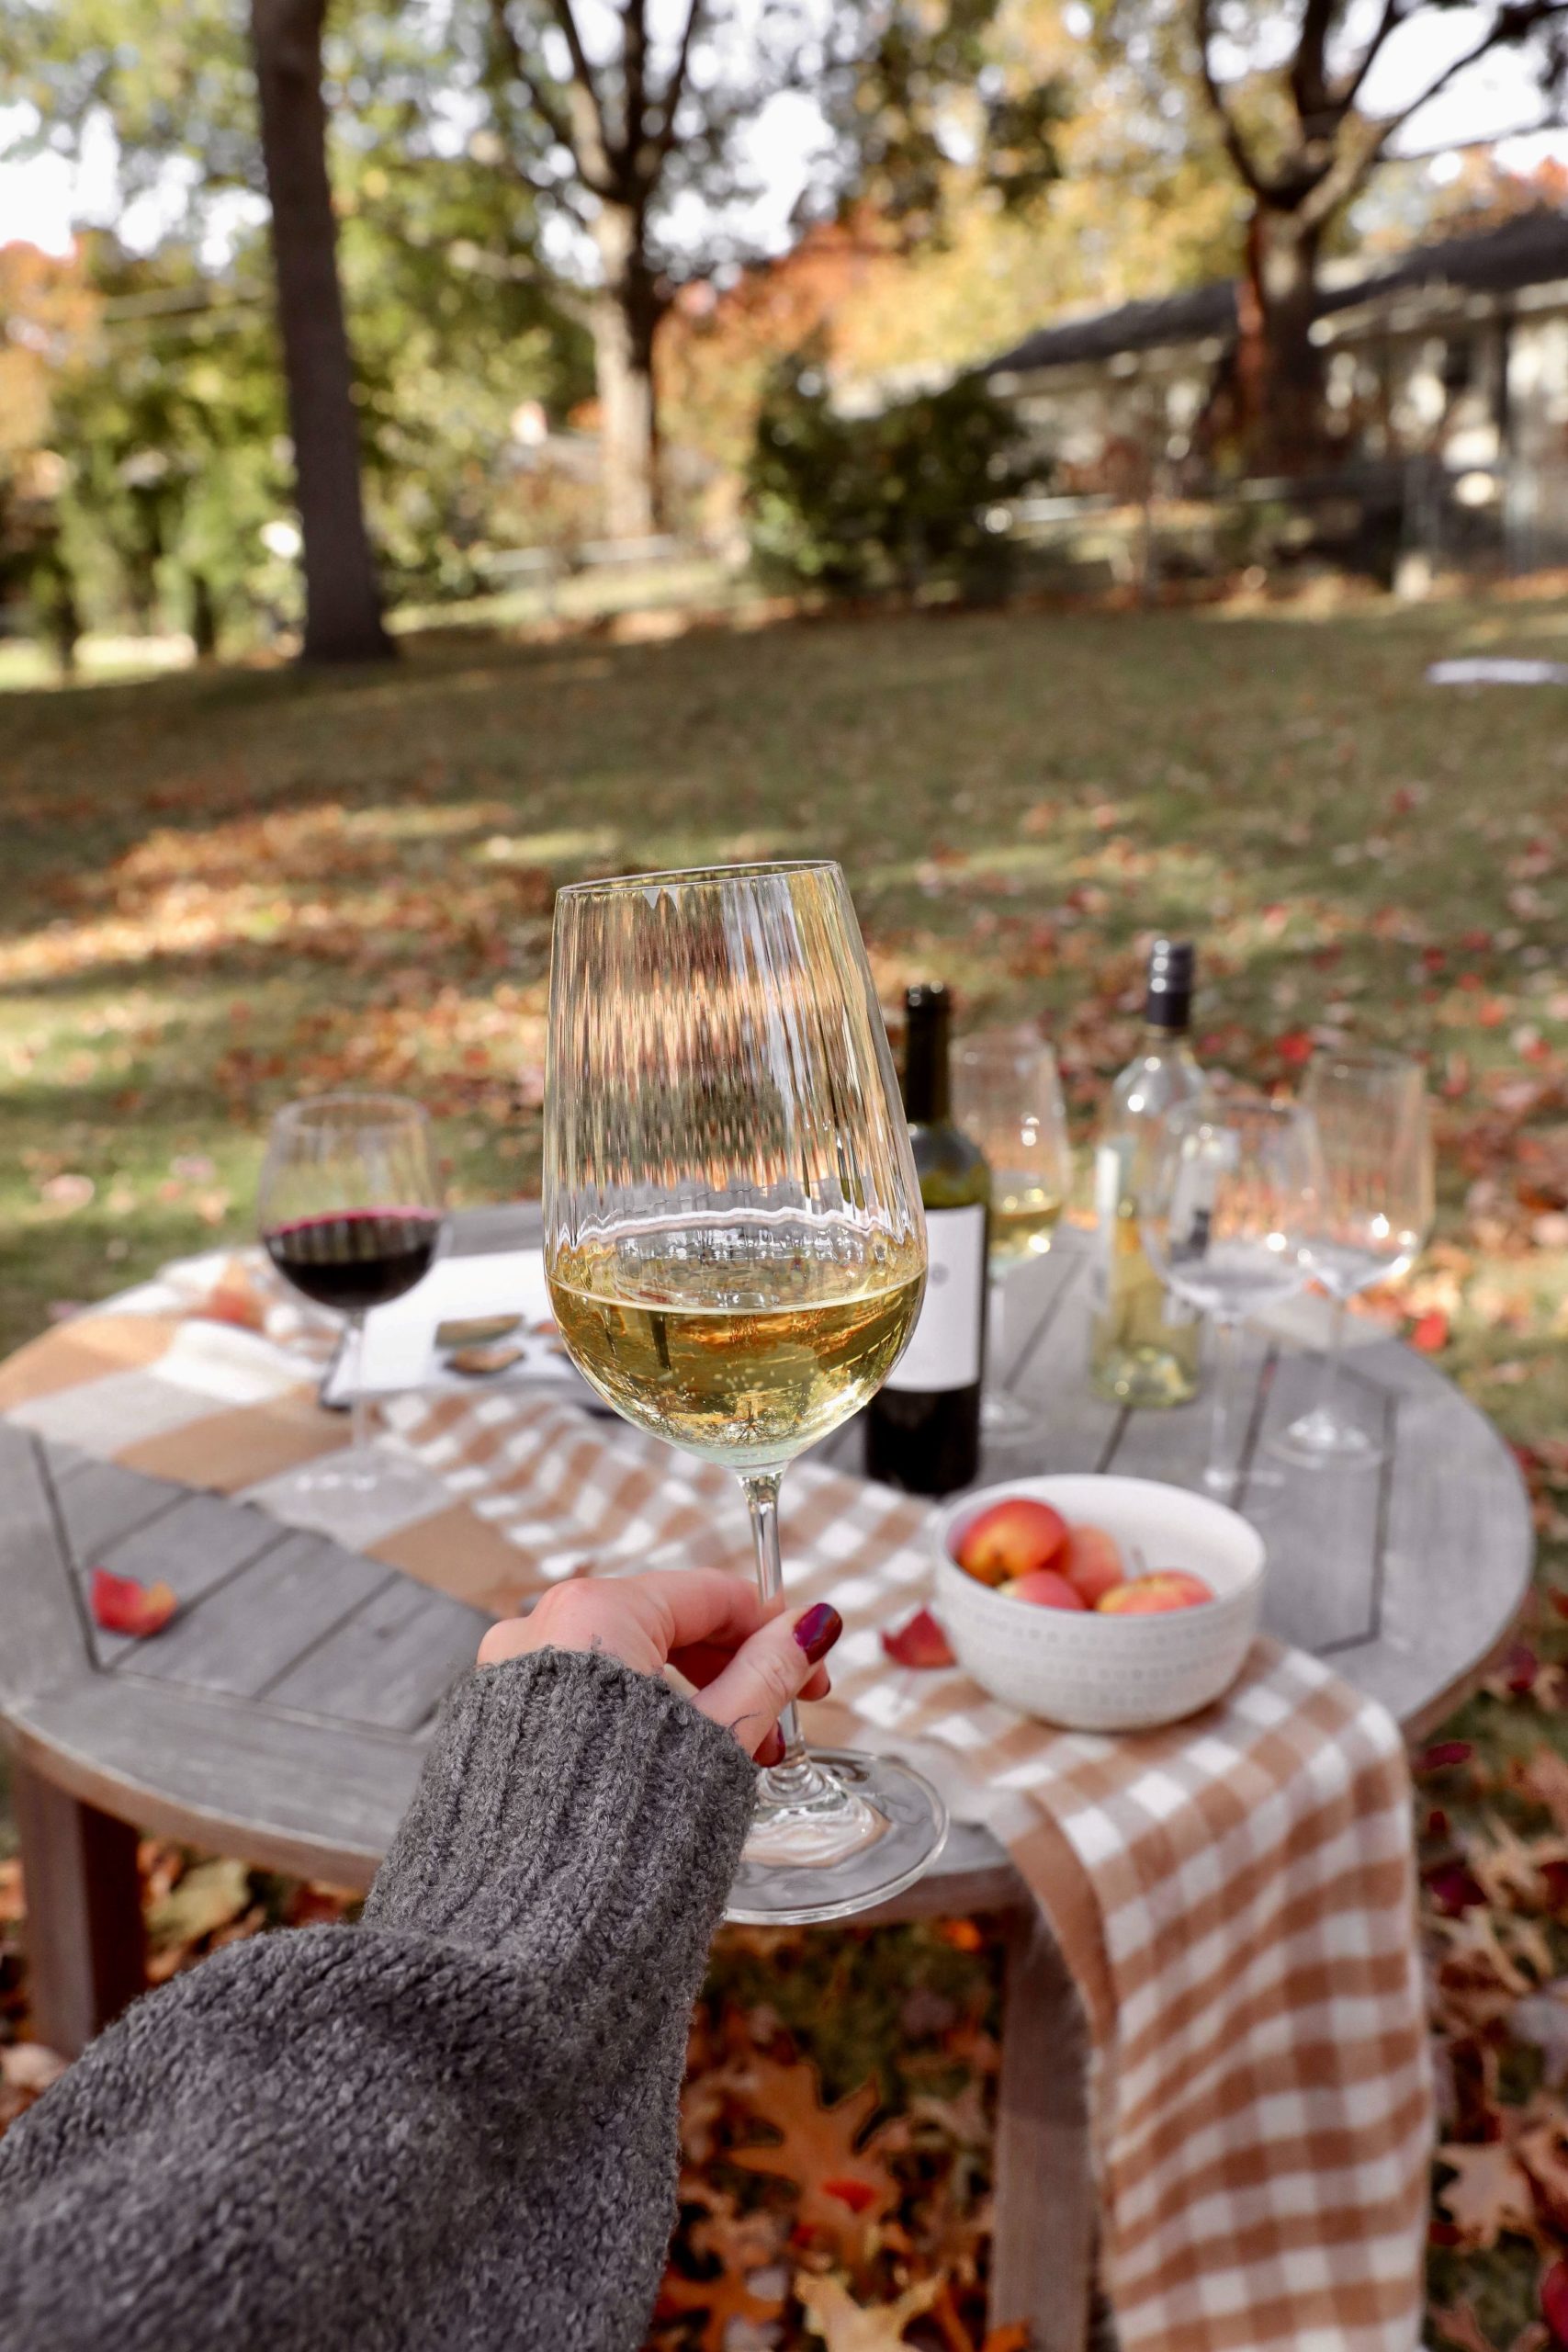 https://dailydoseofcharm.com/wp-content/uploads/2022/10/Ribbed-wine-glasses-red-white-fall-picnic-lauren-emily-lindmark-daily-dose-of-charm-2-scaled.jpg